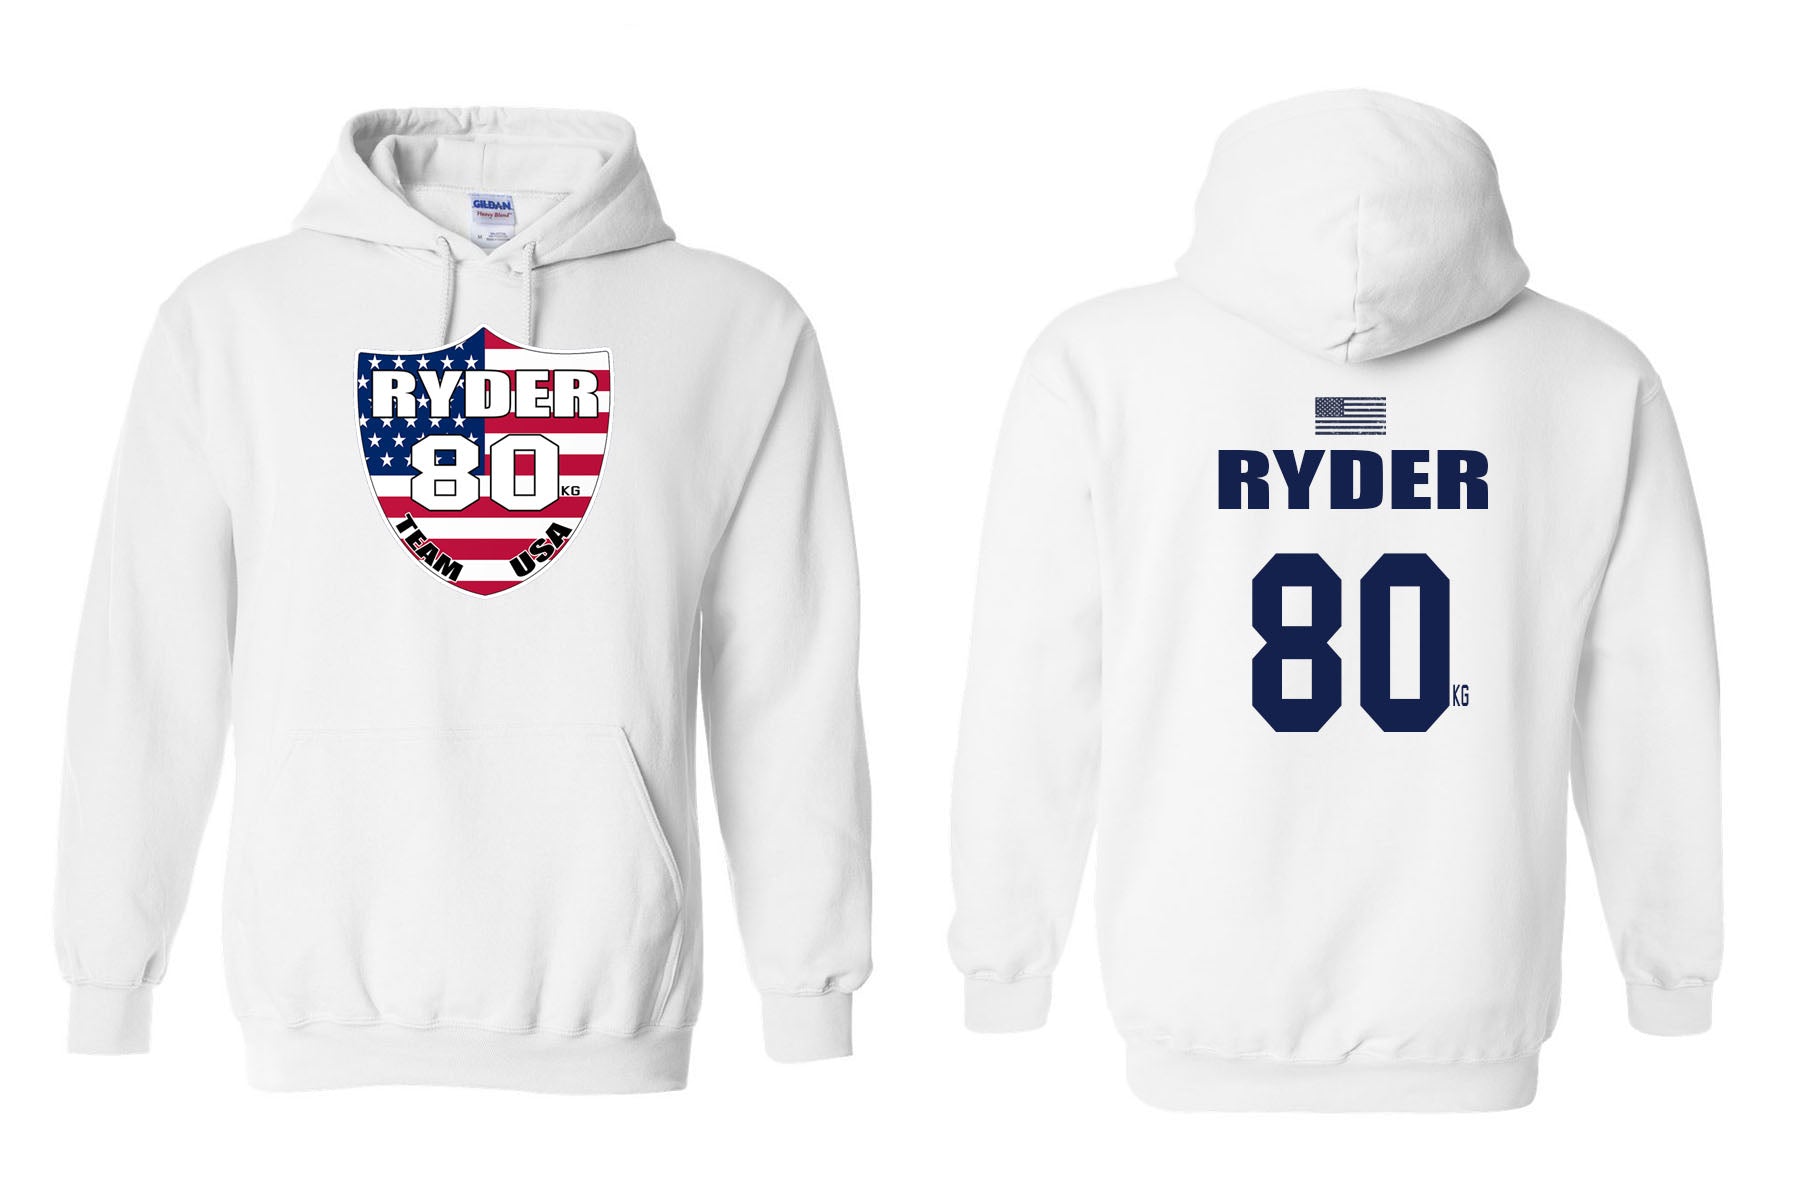 Ryder wrestling Team USA Hooded Sweatshirt